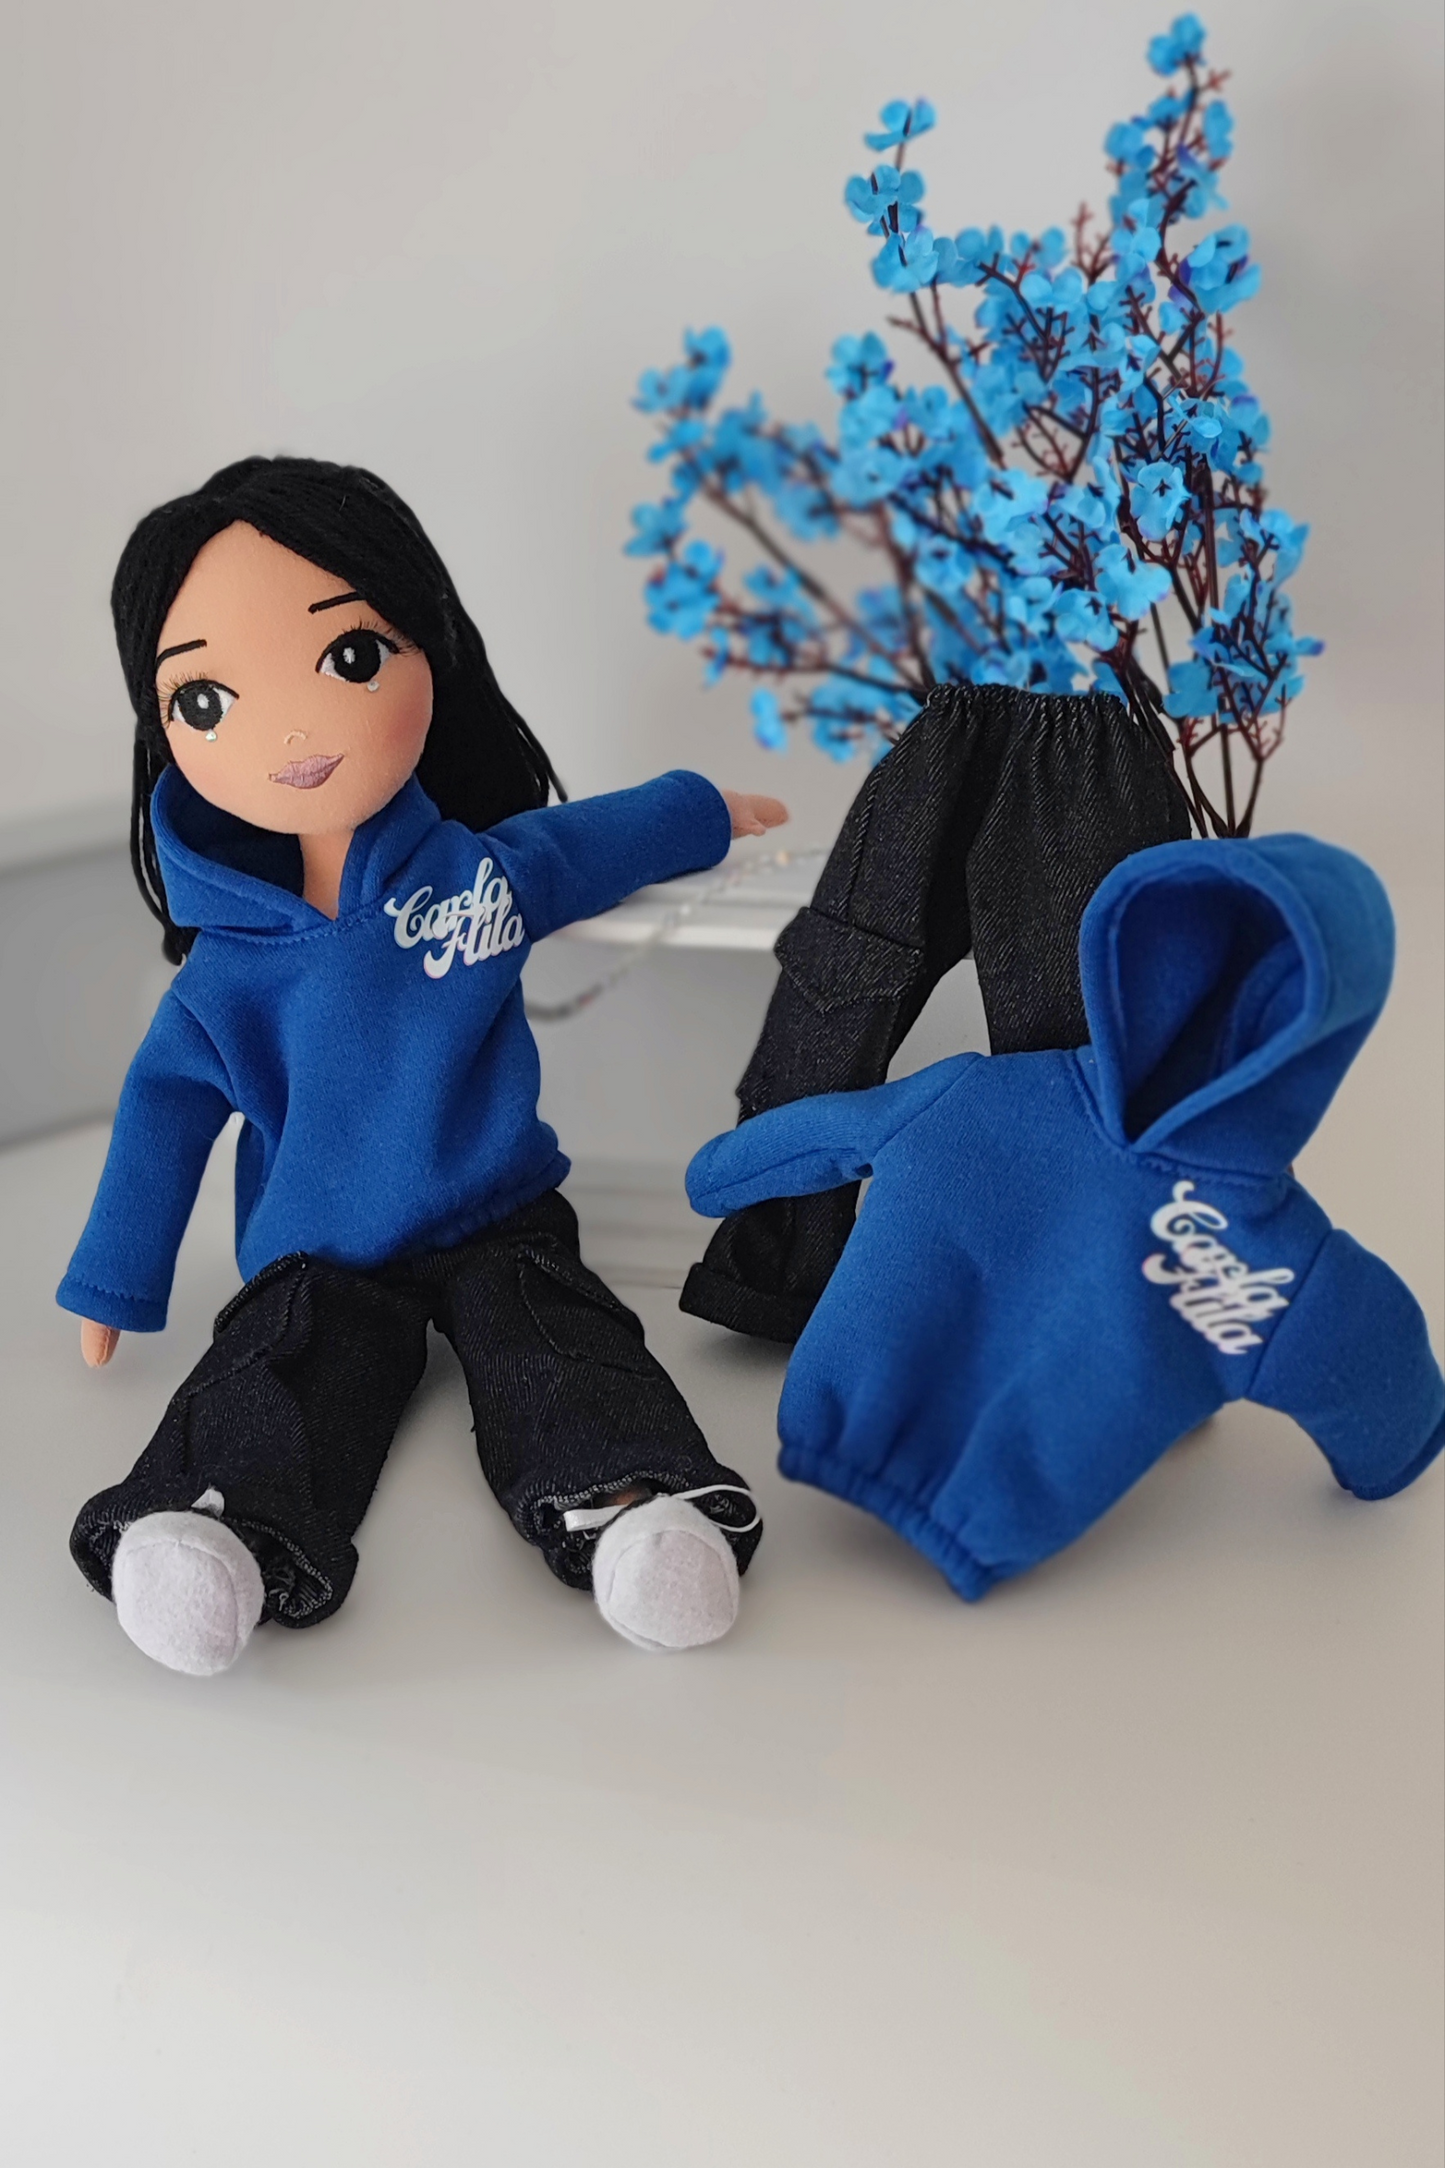 Carla Flila Doll + Blue Sweatshirt and Black Cargo Jeans Set